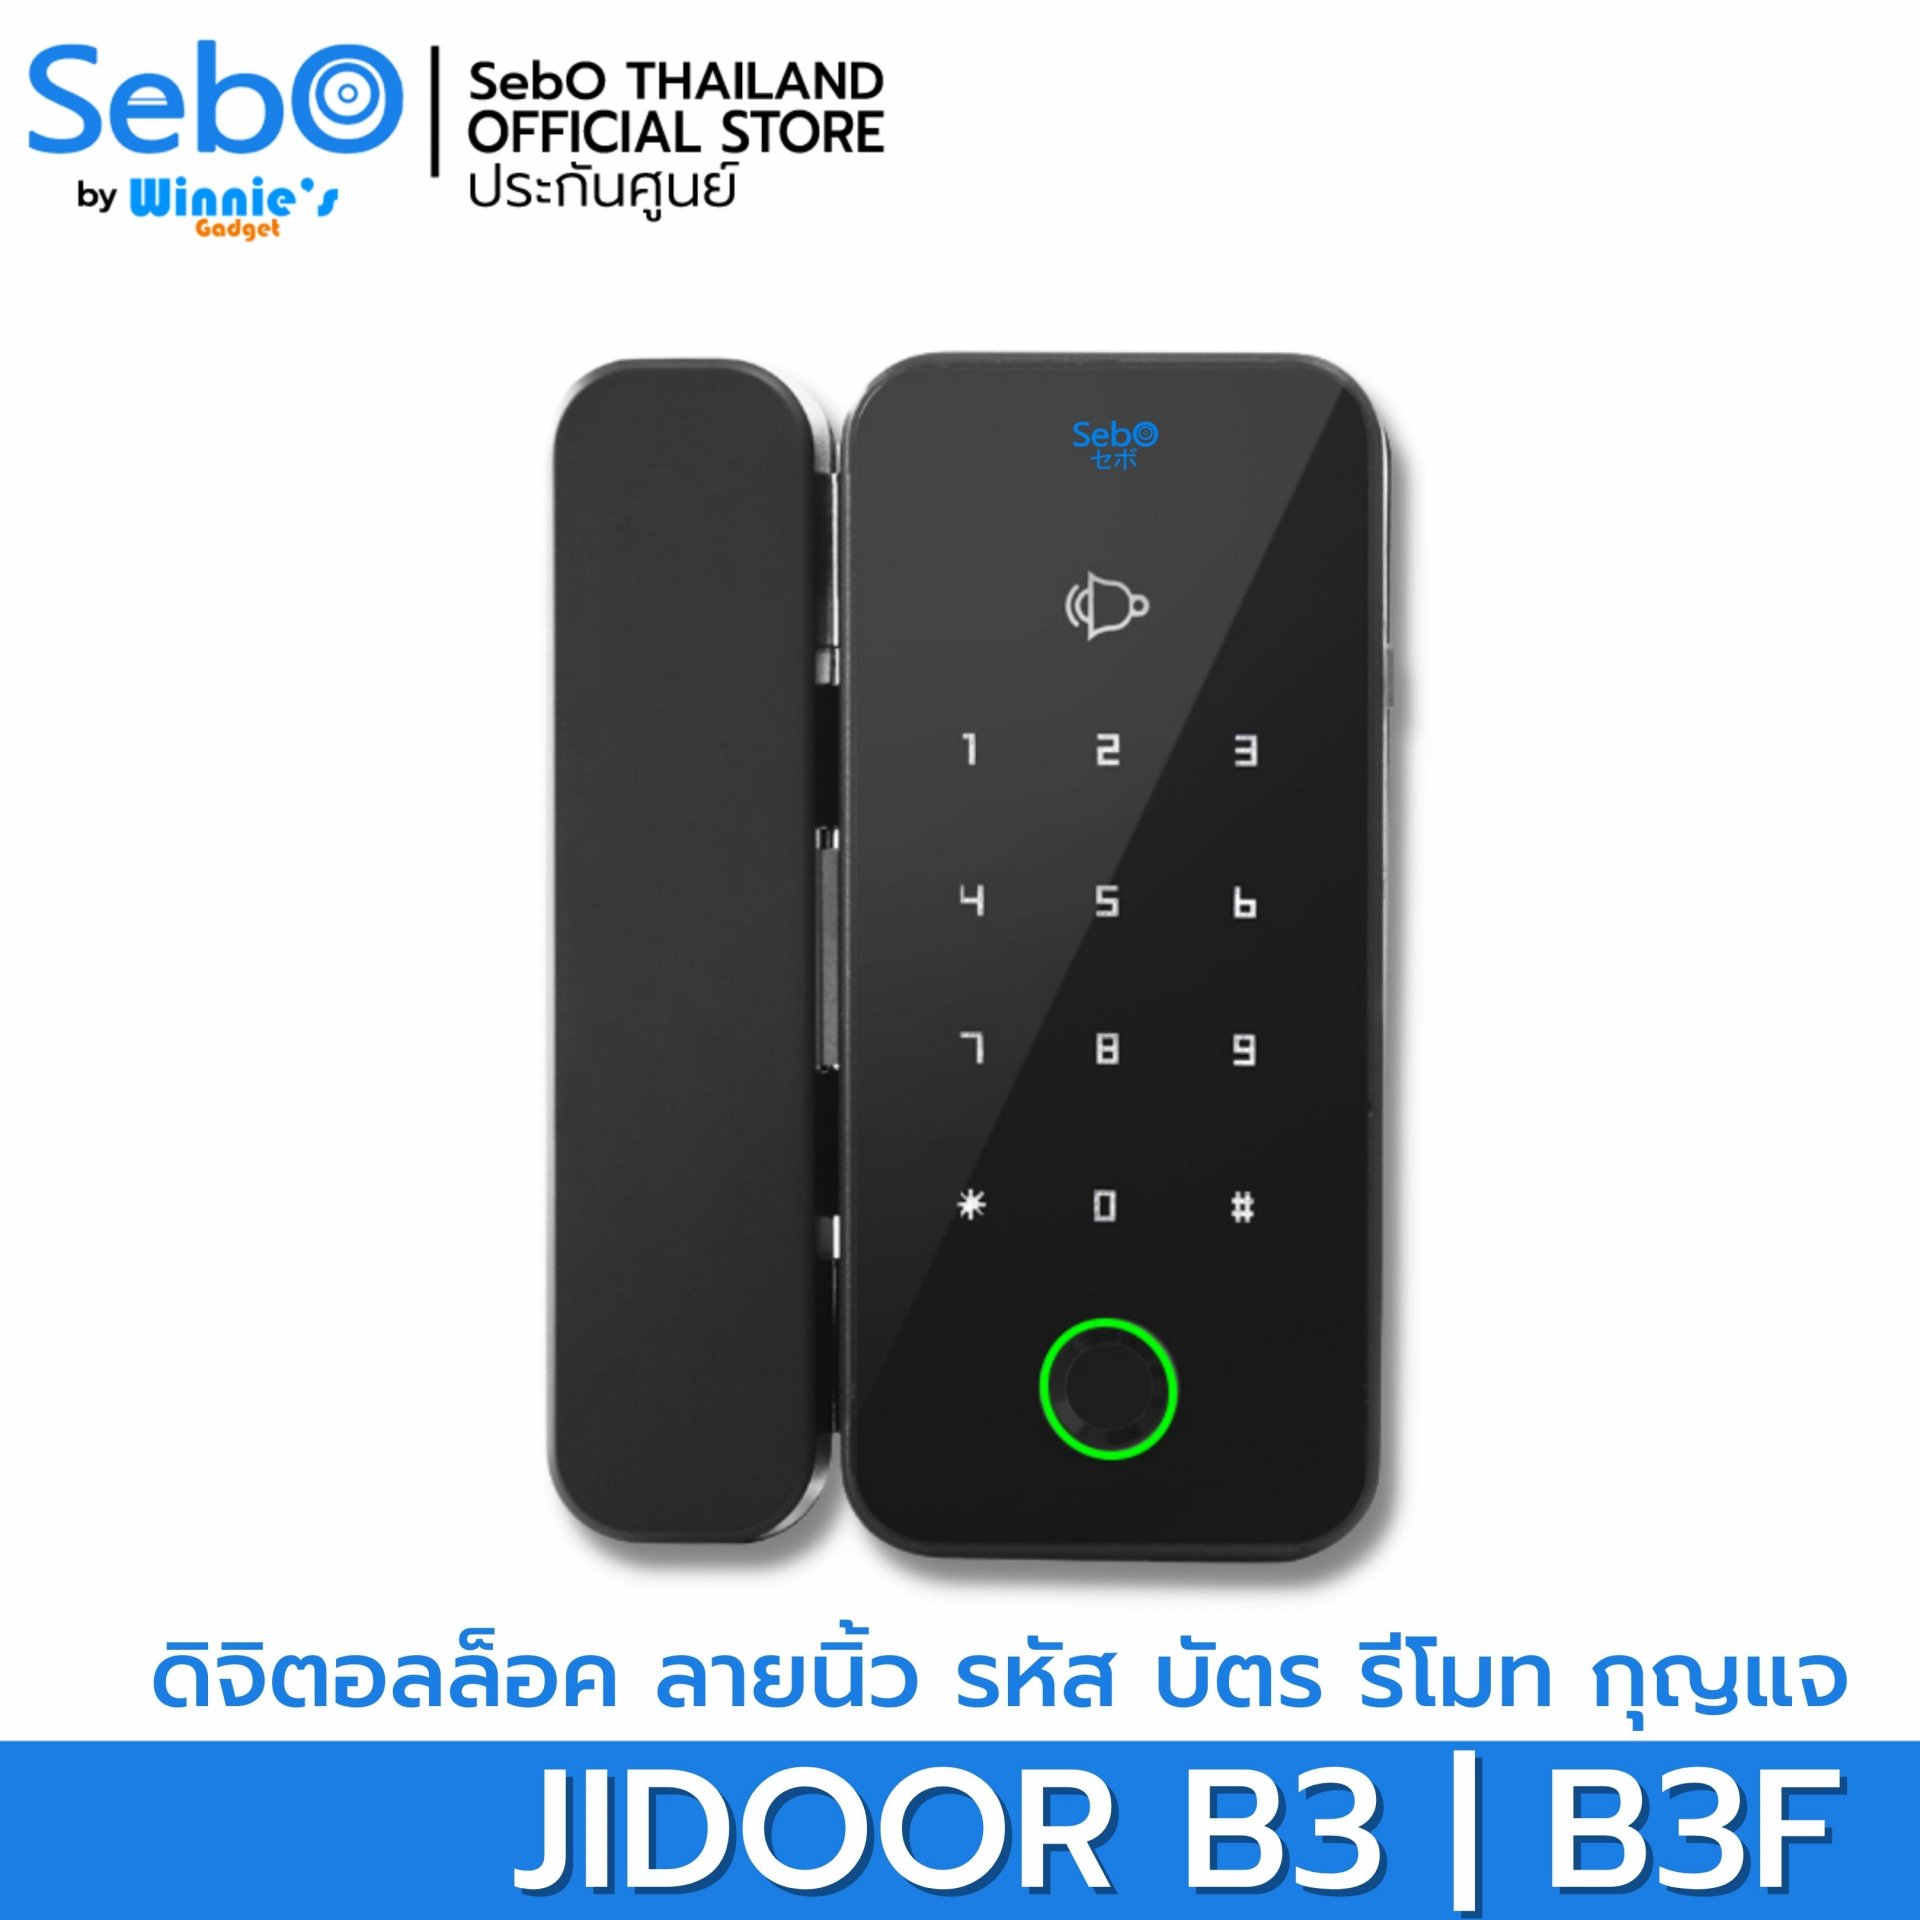 SebO Jidoor B3